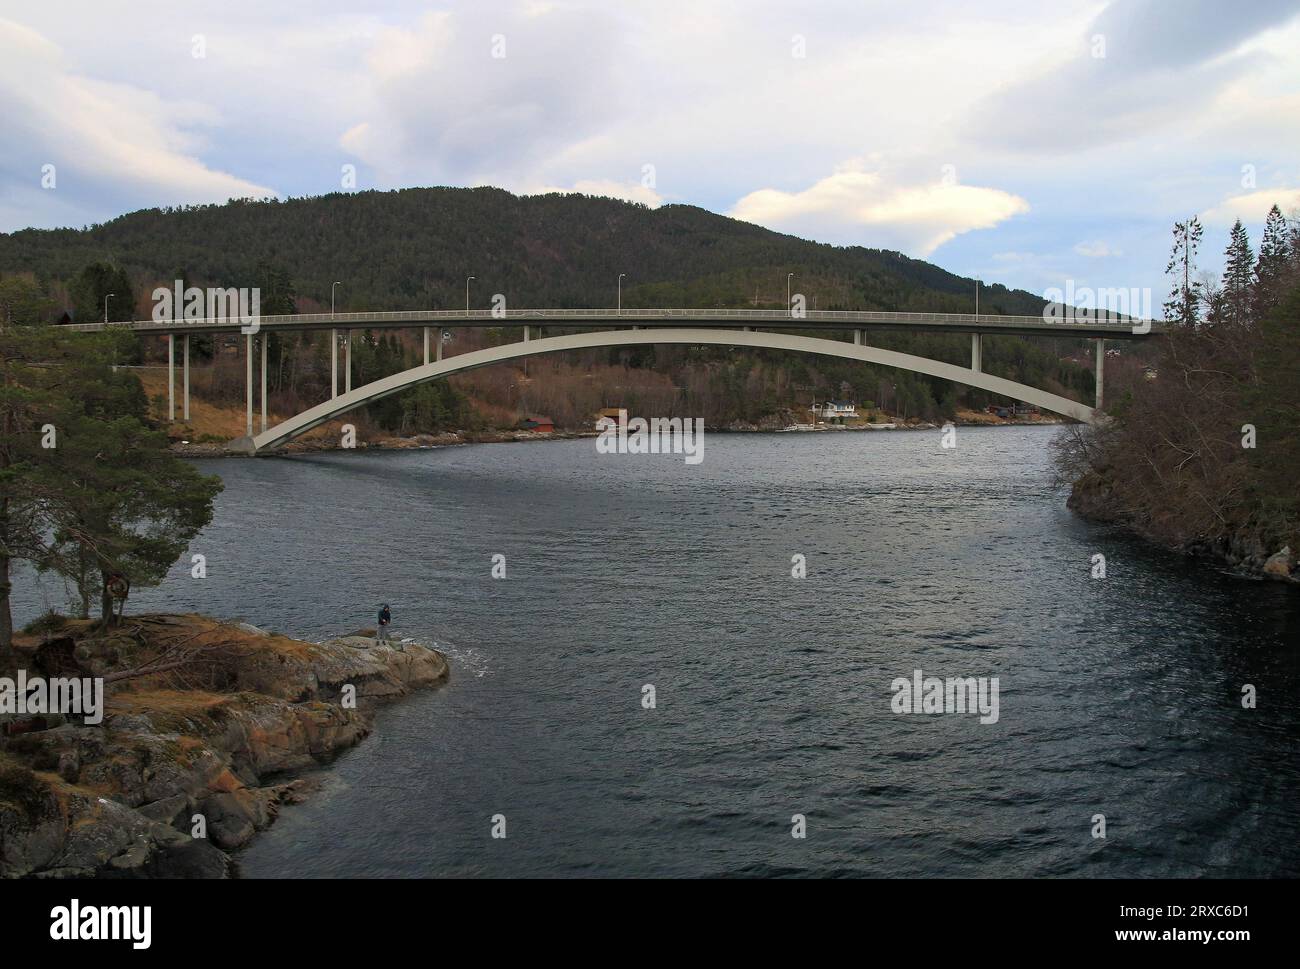 Skodjebruene/les ponts de Skodje (1922 -2004) traversant le Ellingsøyfjord Ålesund, Norvège. Béton moderne, Straumsbrua remplace les vieilles merveilles Banque D'Images